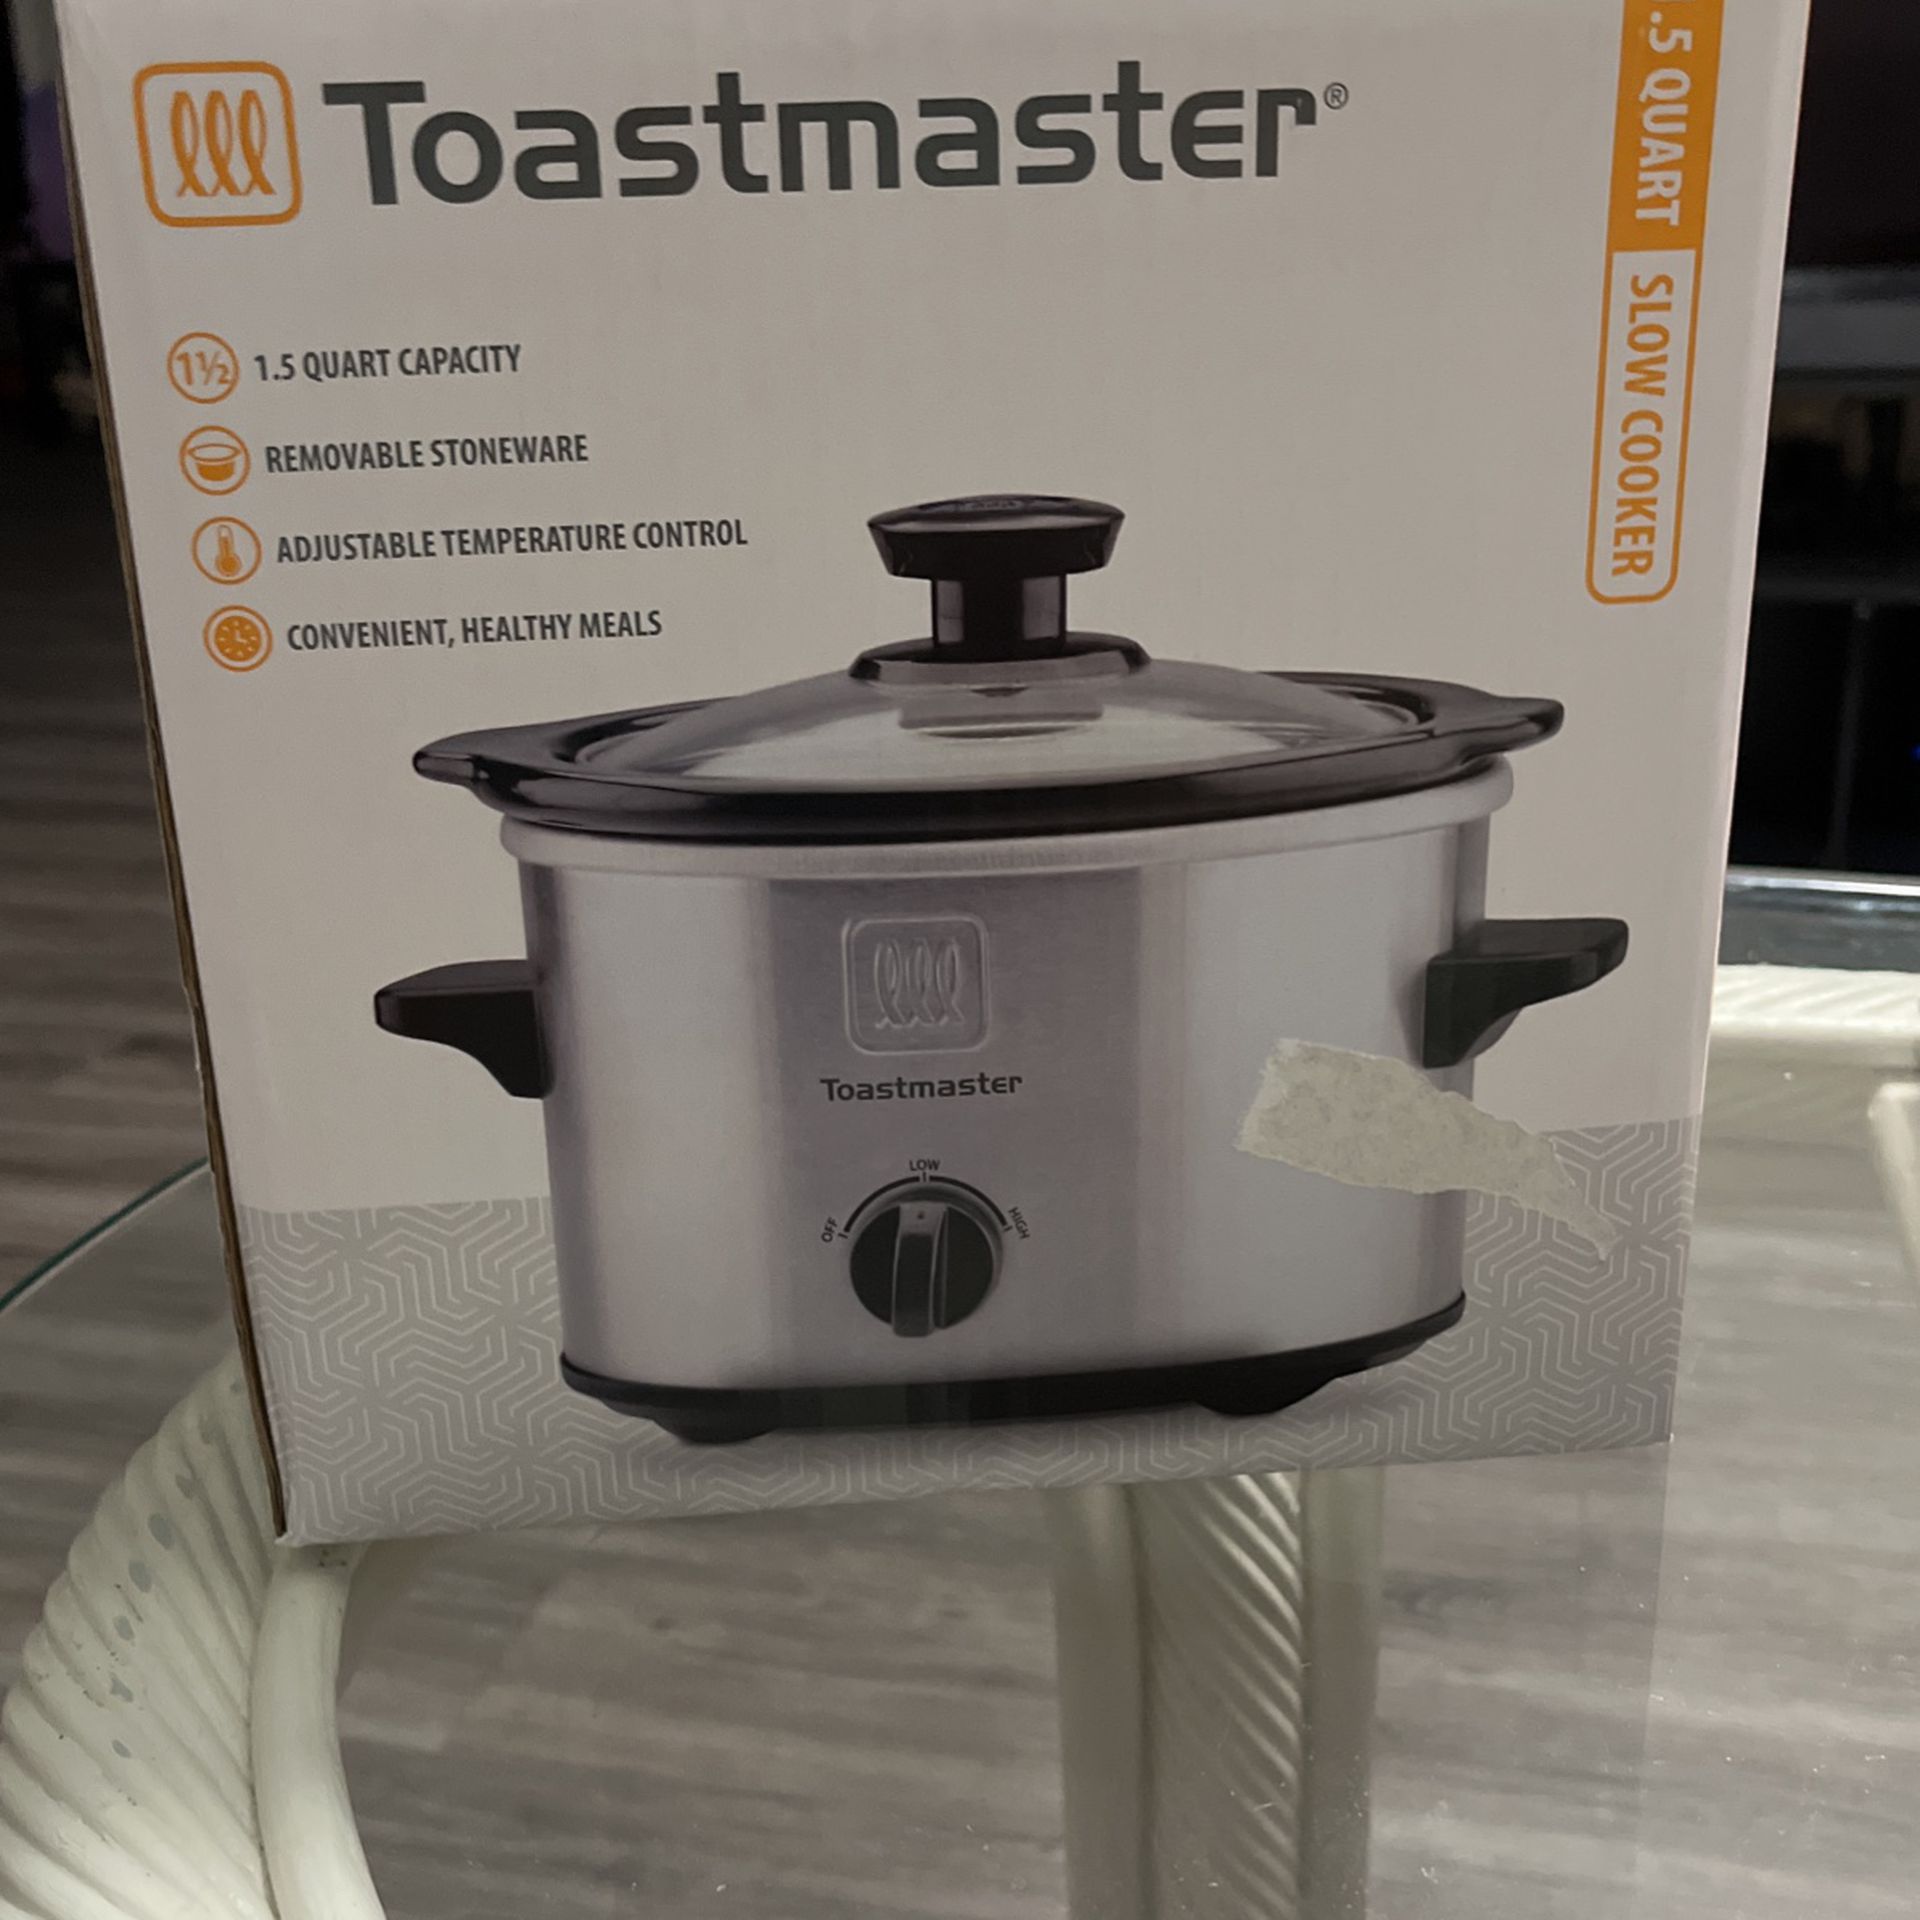 Toastmaster 4 Quart Slow Cooker